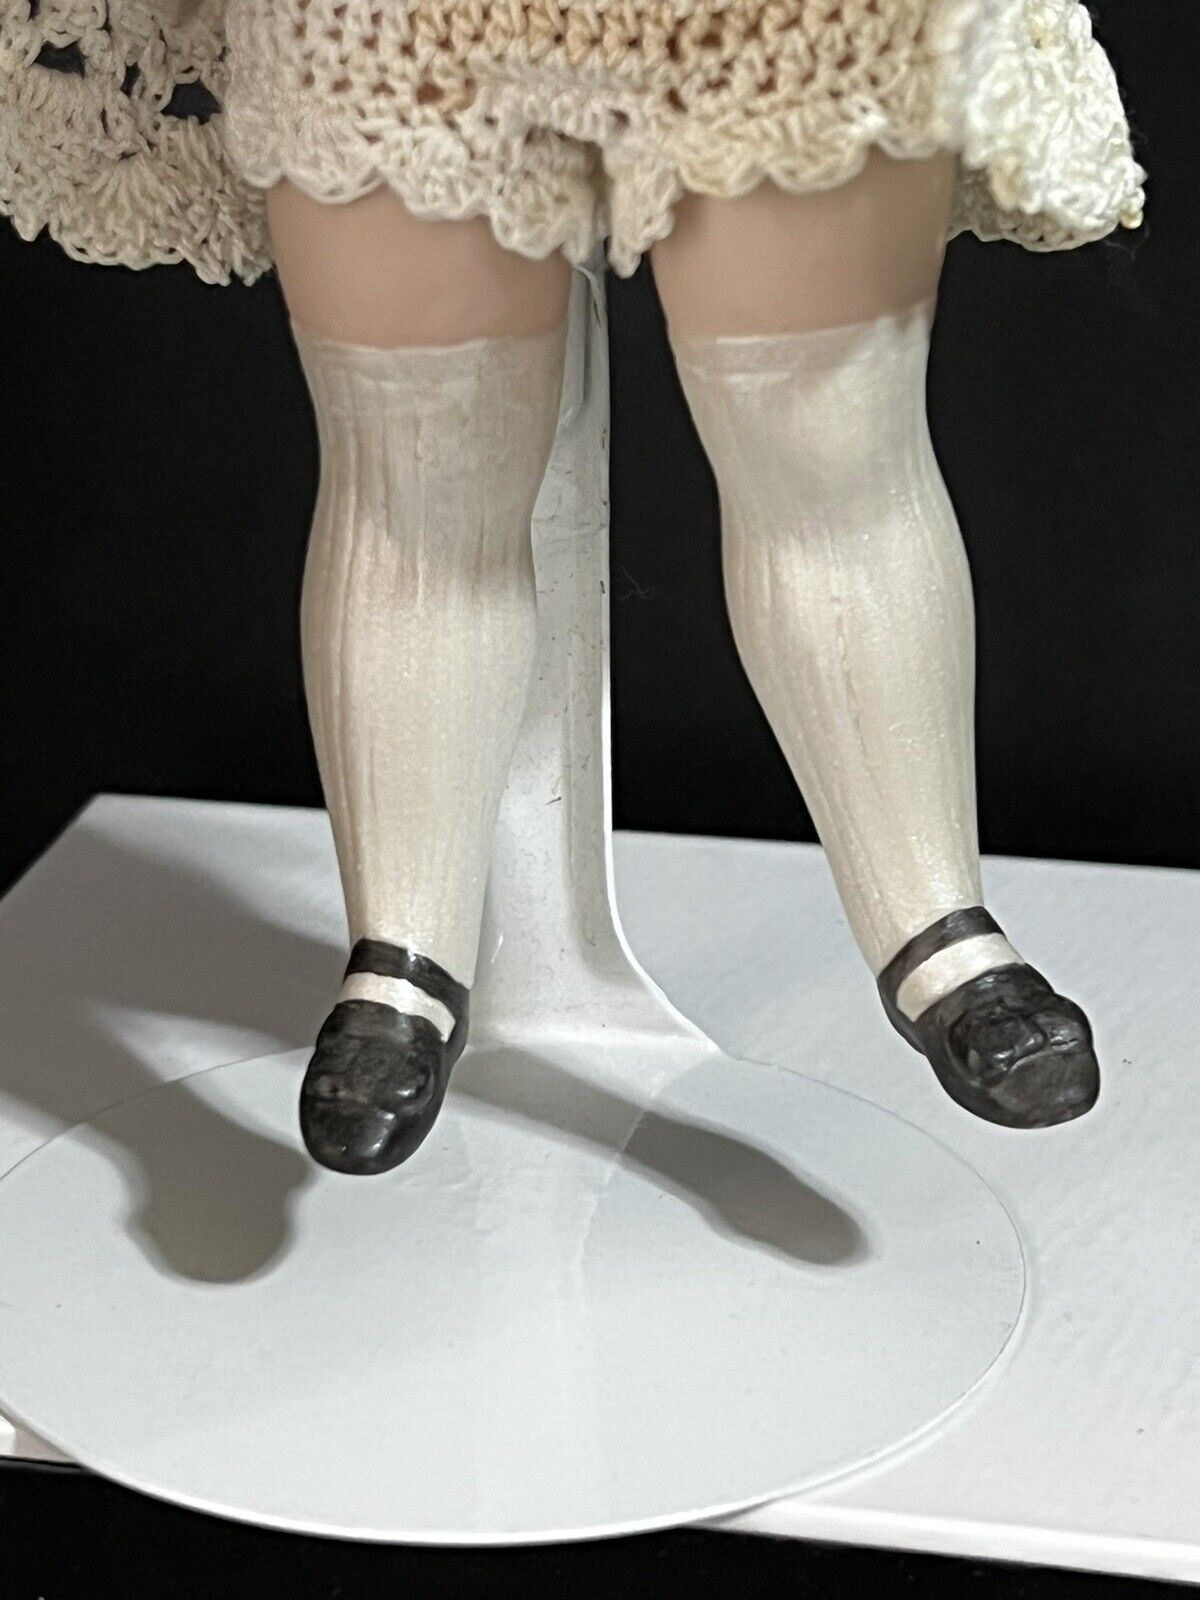 Artist Reproduction of Antique Simon Halbig German Flapper 7 1/2” Doll